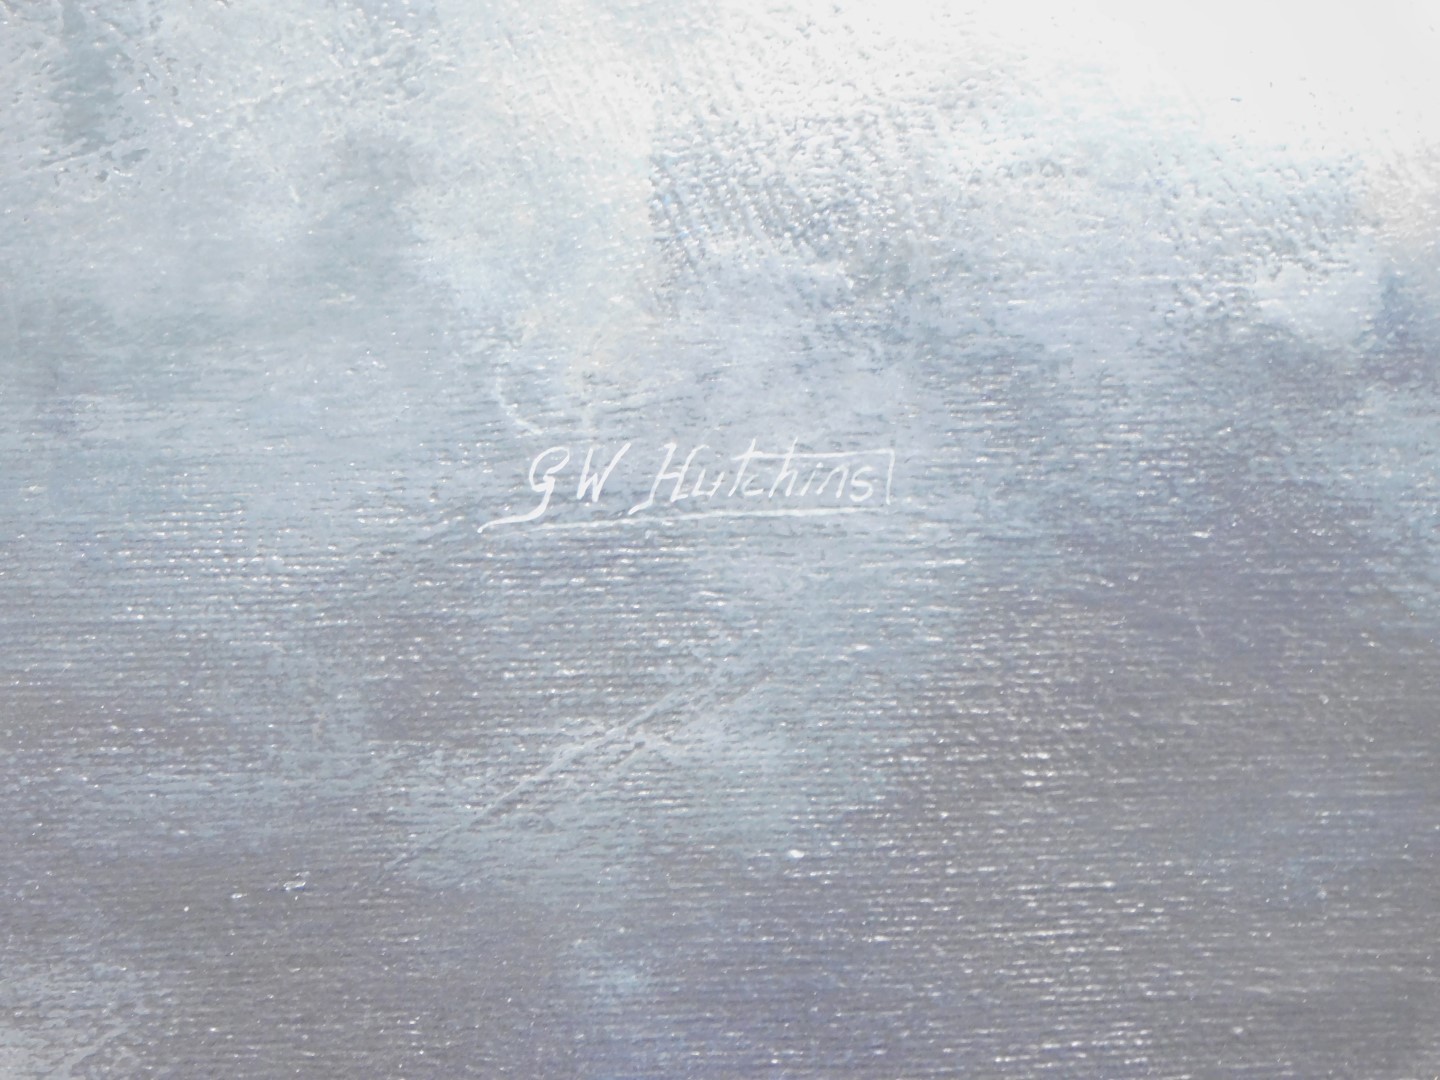 G W Hutchins (20thC School). Messerschmitt 109, oil on canvas, signed, 49cm x 75cm, in silvered fram - Image 3 of 3